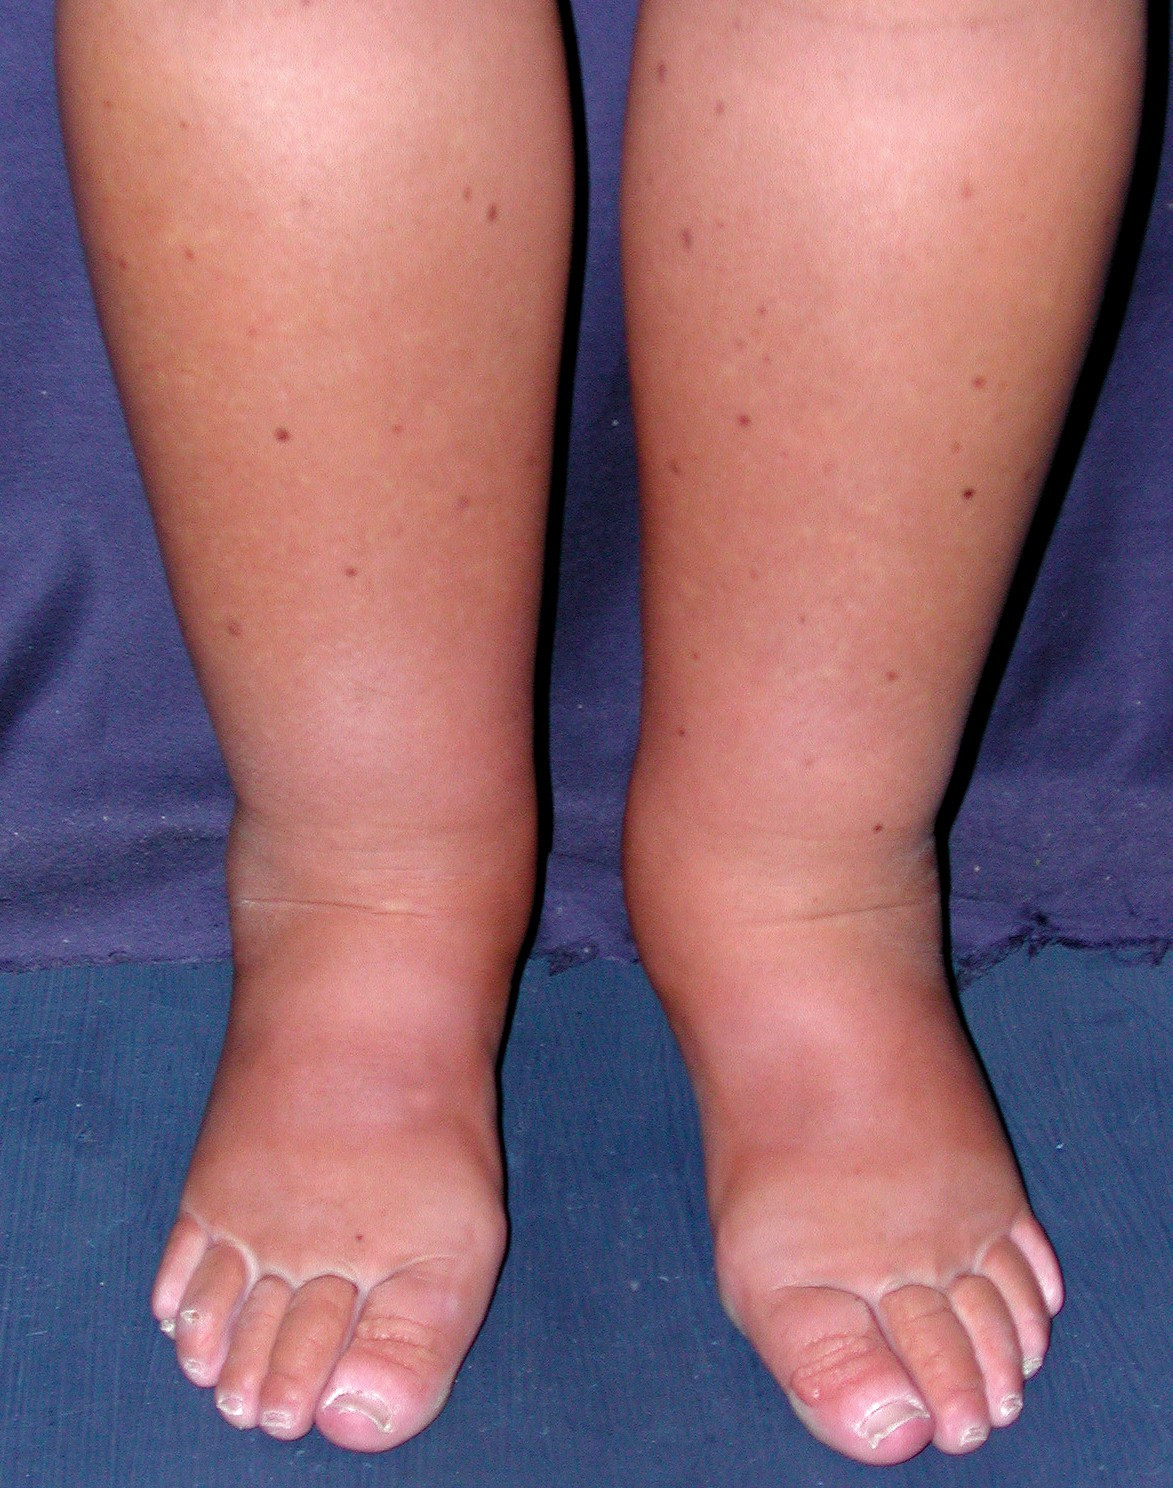 File:Primary intestinal lymphangiectasia (Waldmann's disease) - legs.jpg